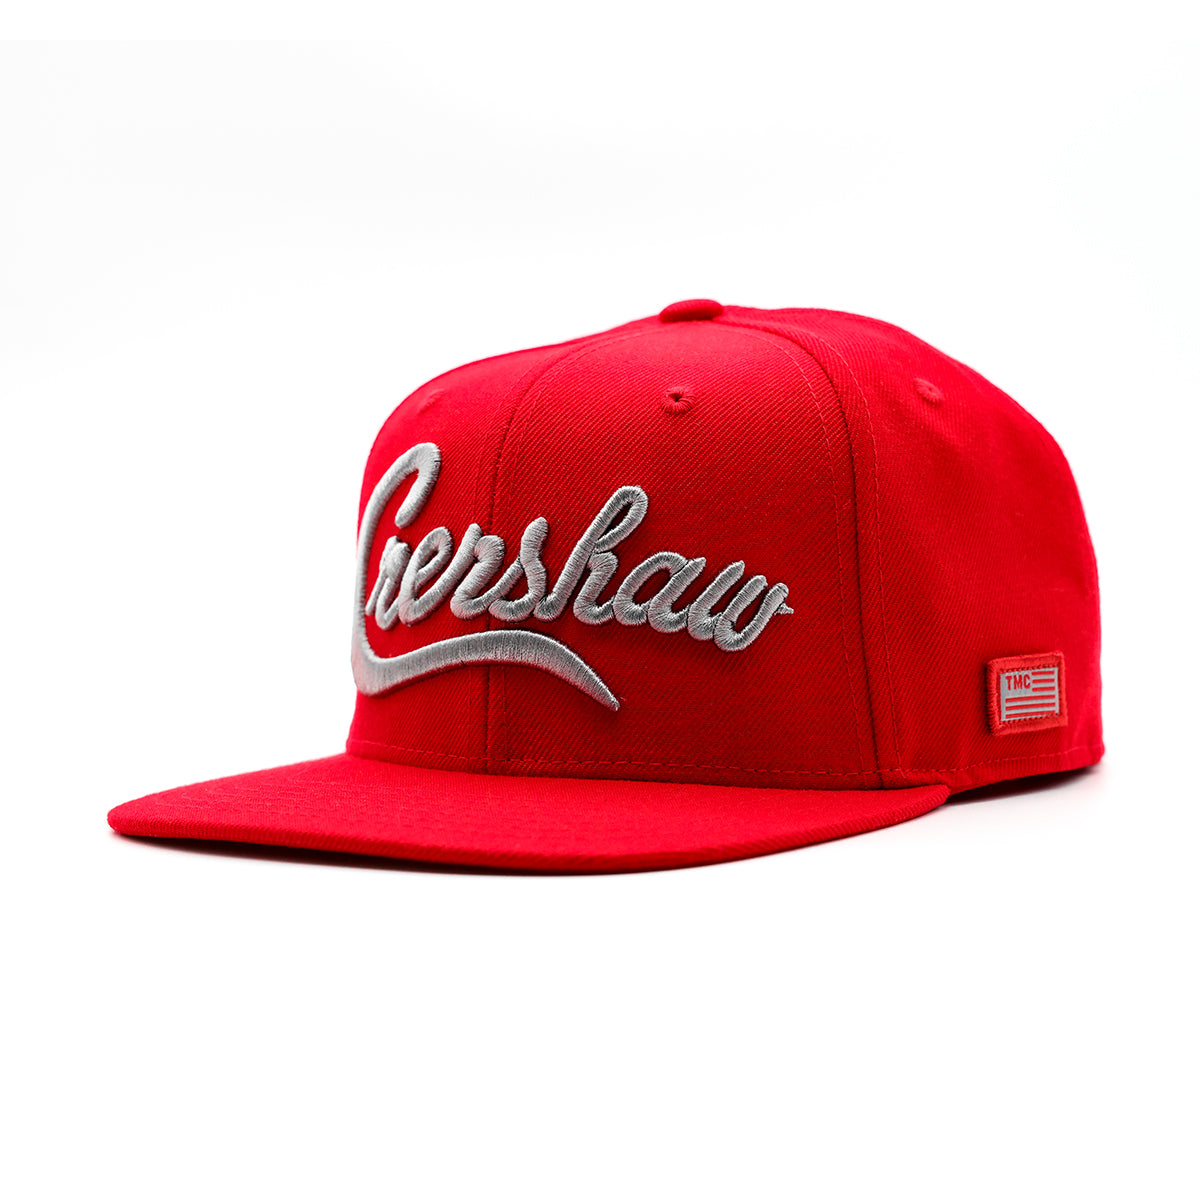 Crenshaw Limited Edition Snapback - Red/Charcoal - Angle